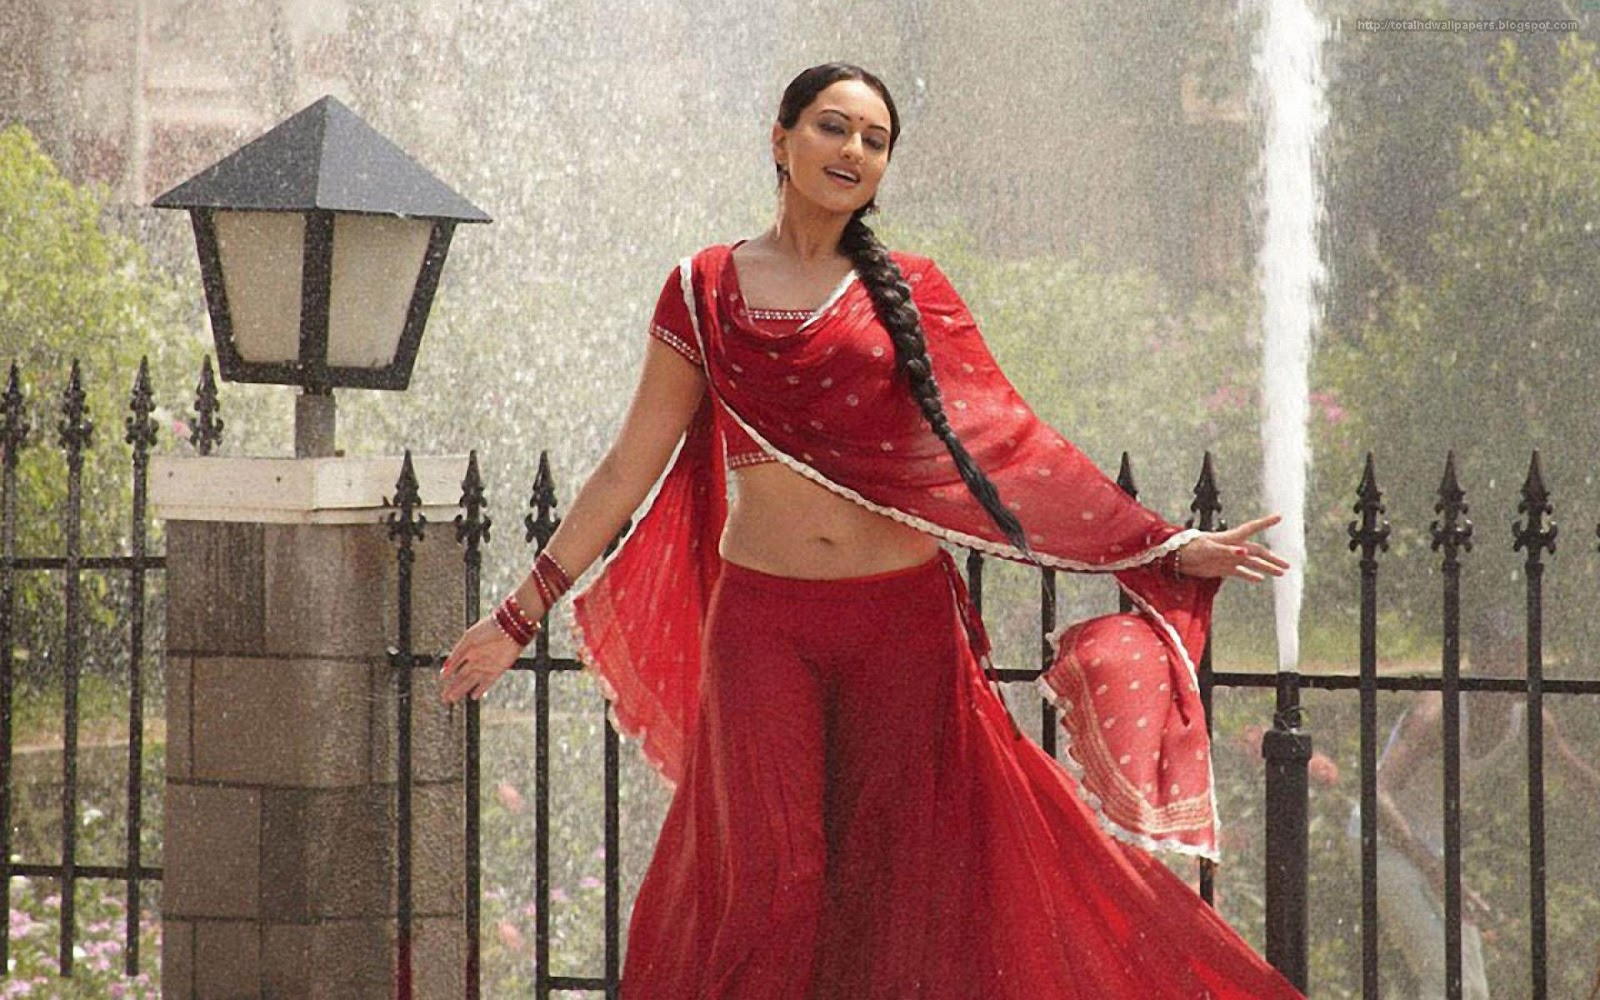 héroïne hollywood fond d'écran hd,sari,vêtements,abdomen,vêtements de cérémonie,tronc